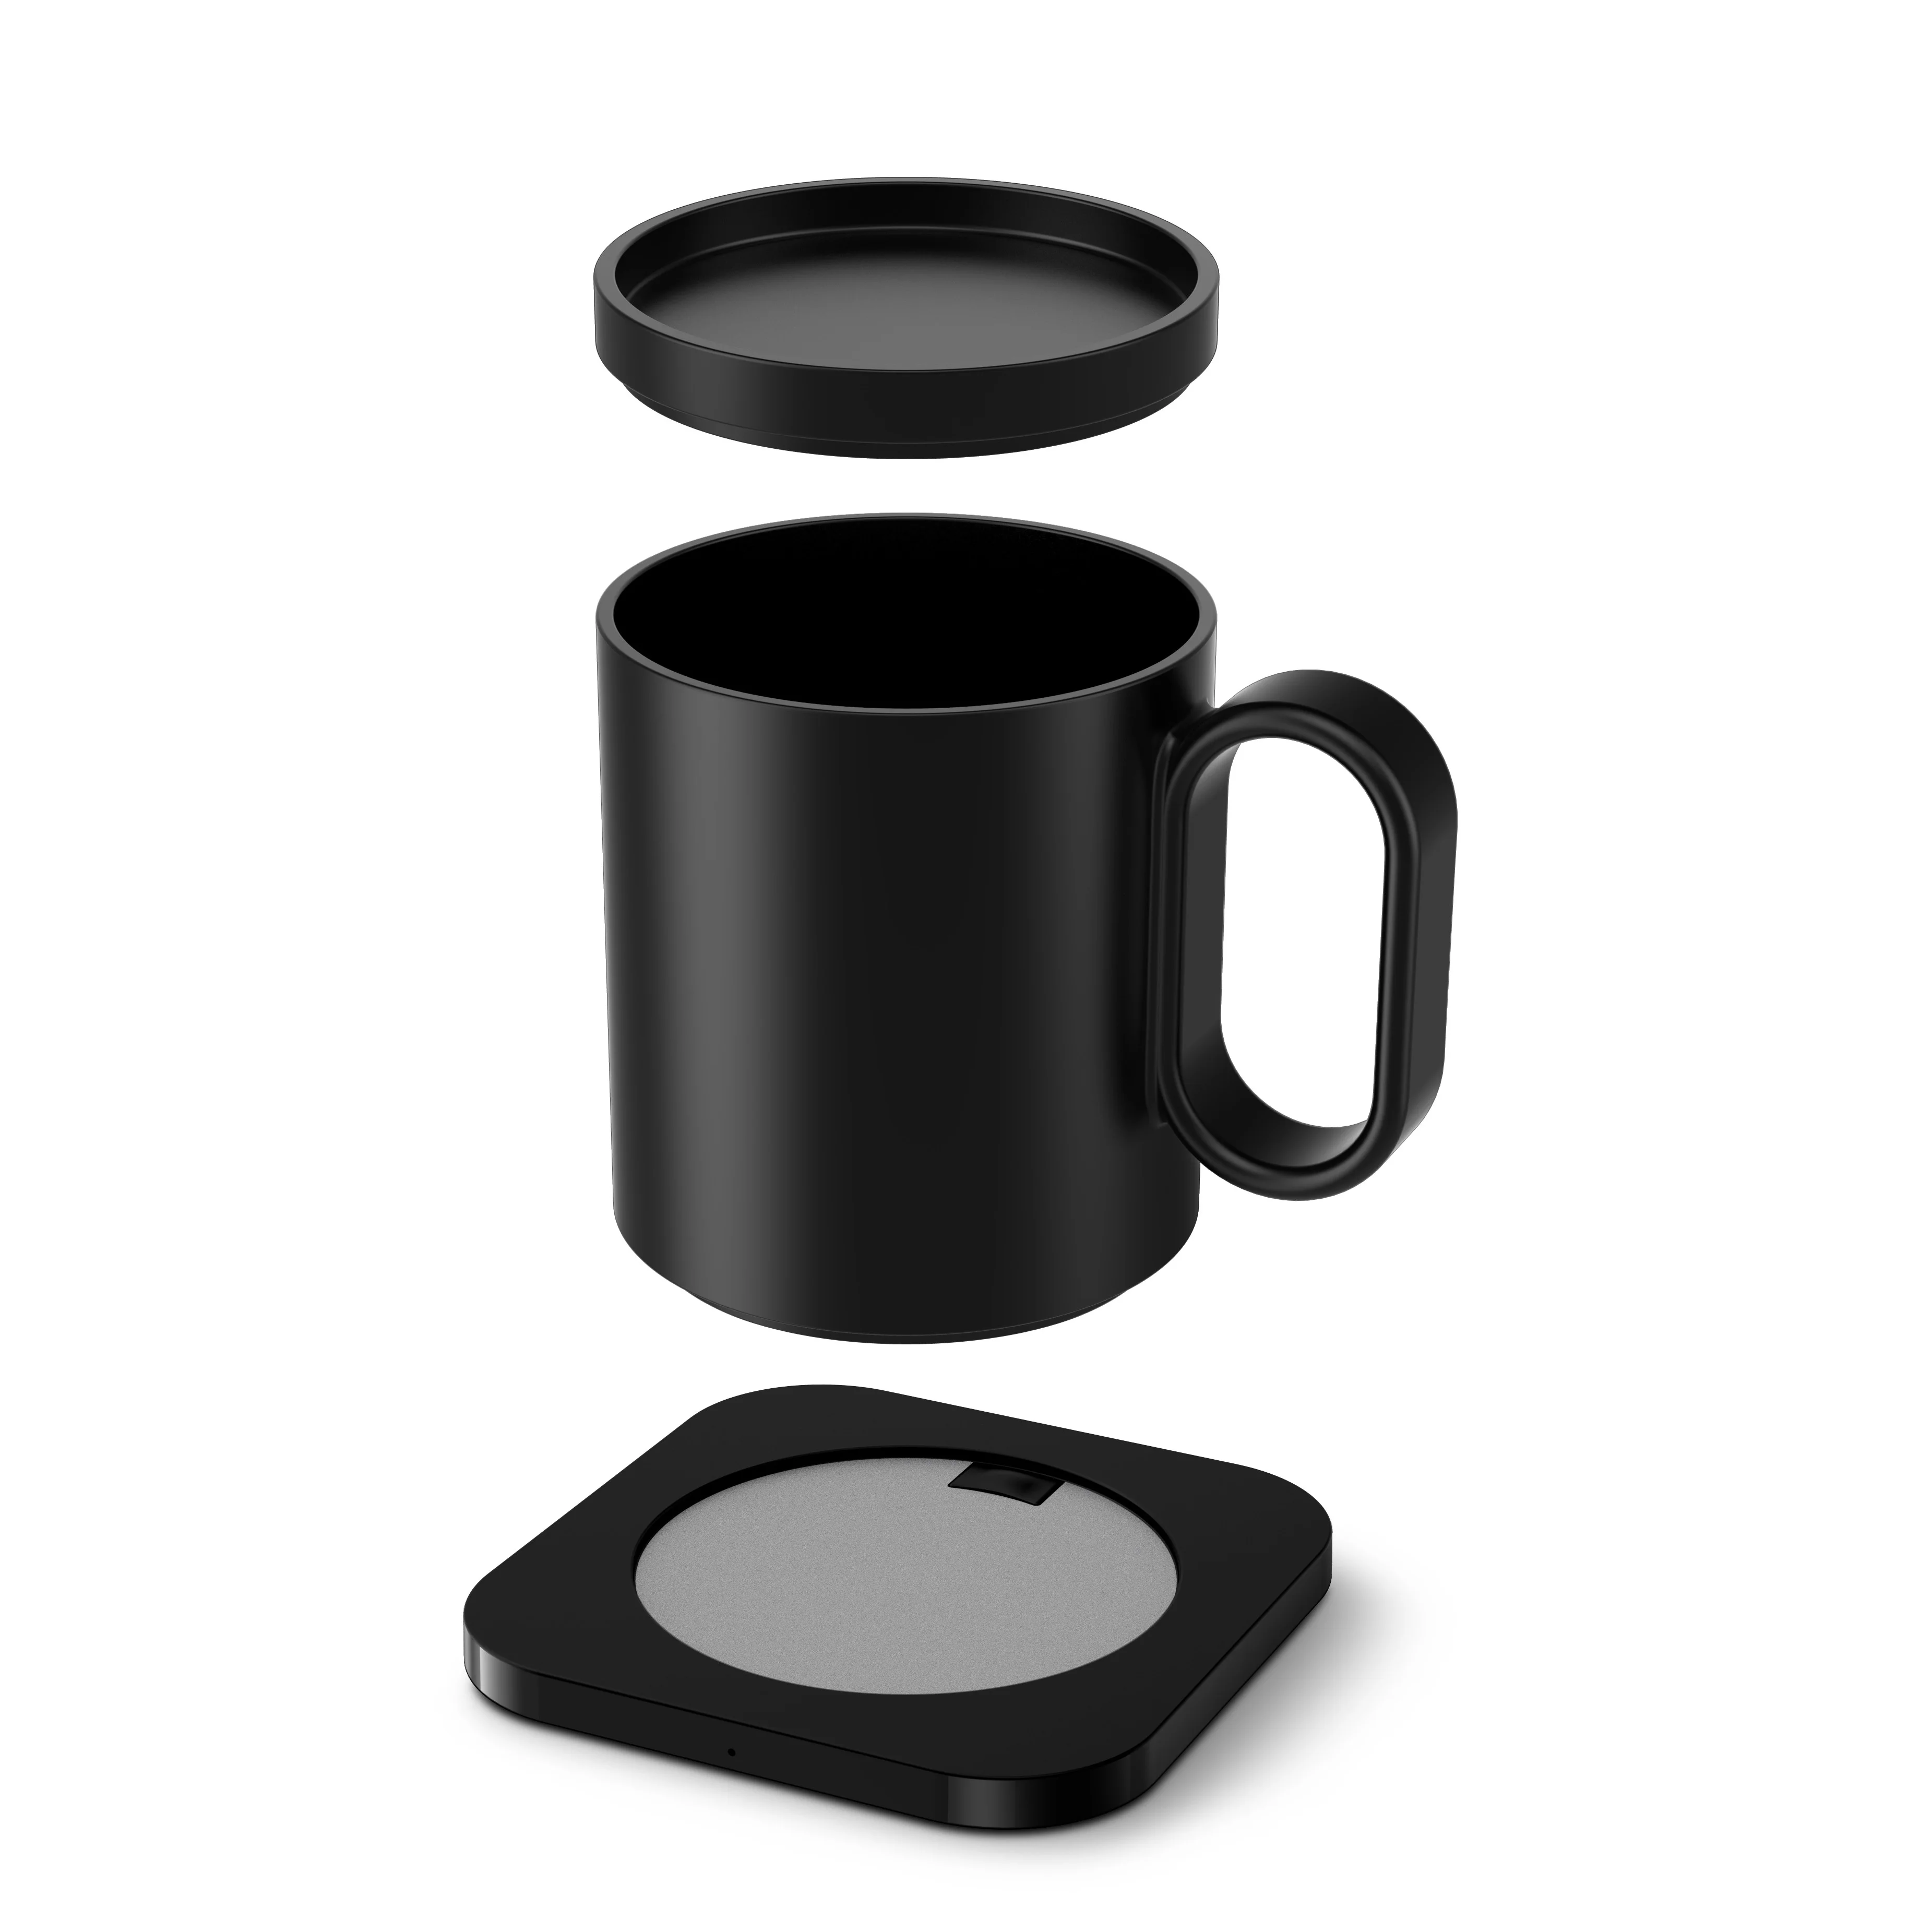 Smart Mug Warmer with Wireless Charger - Beverage Warmer